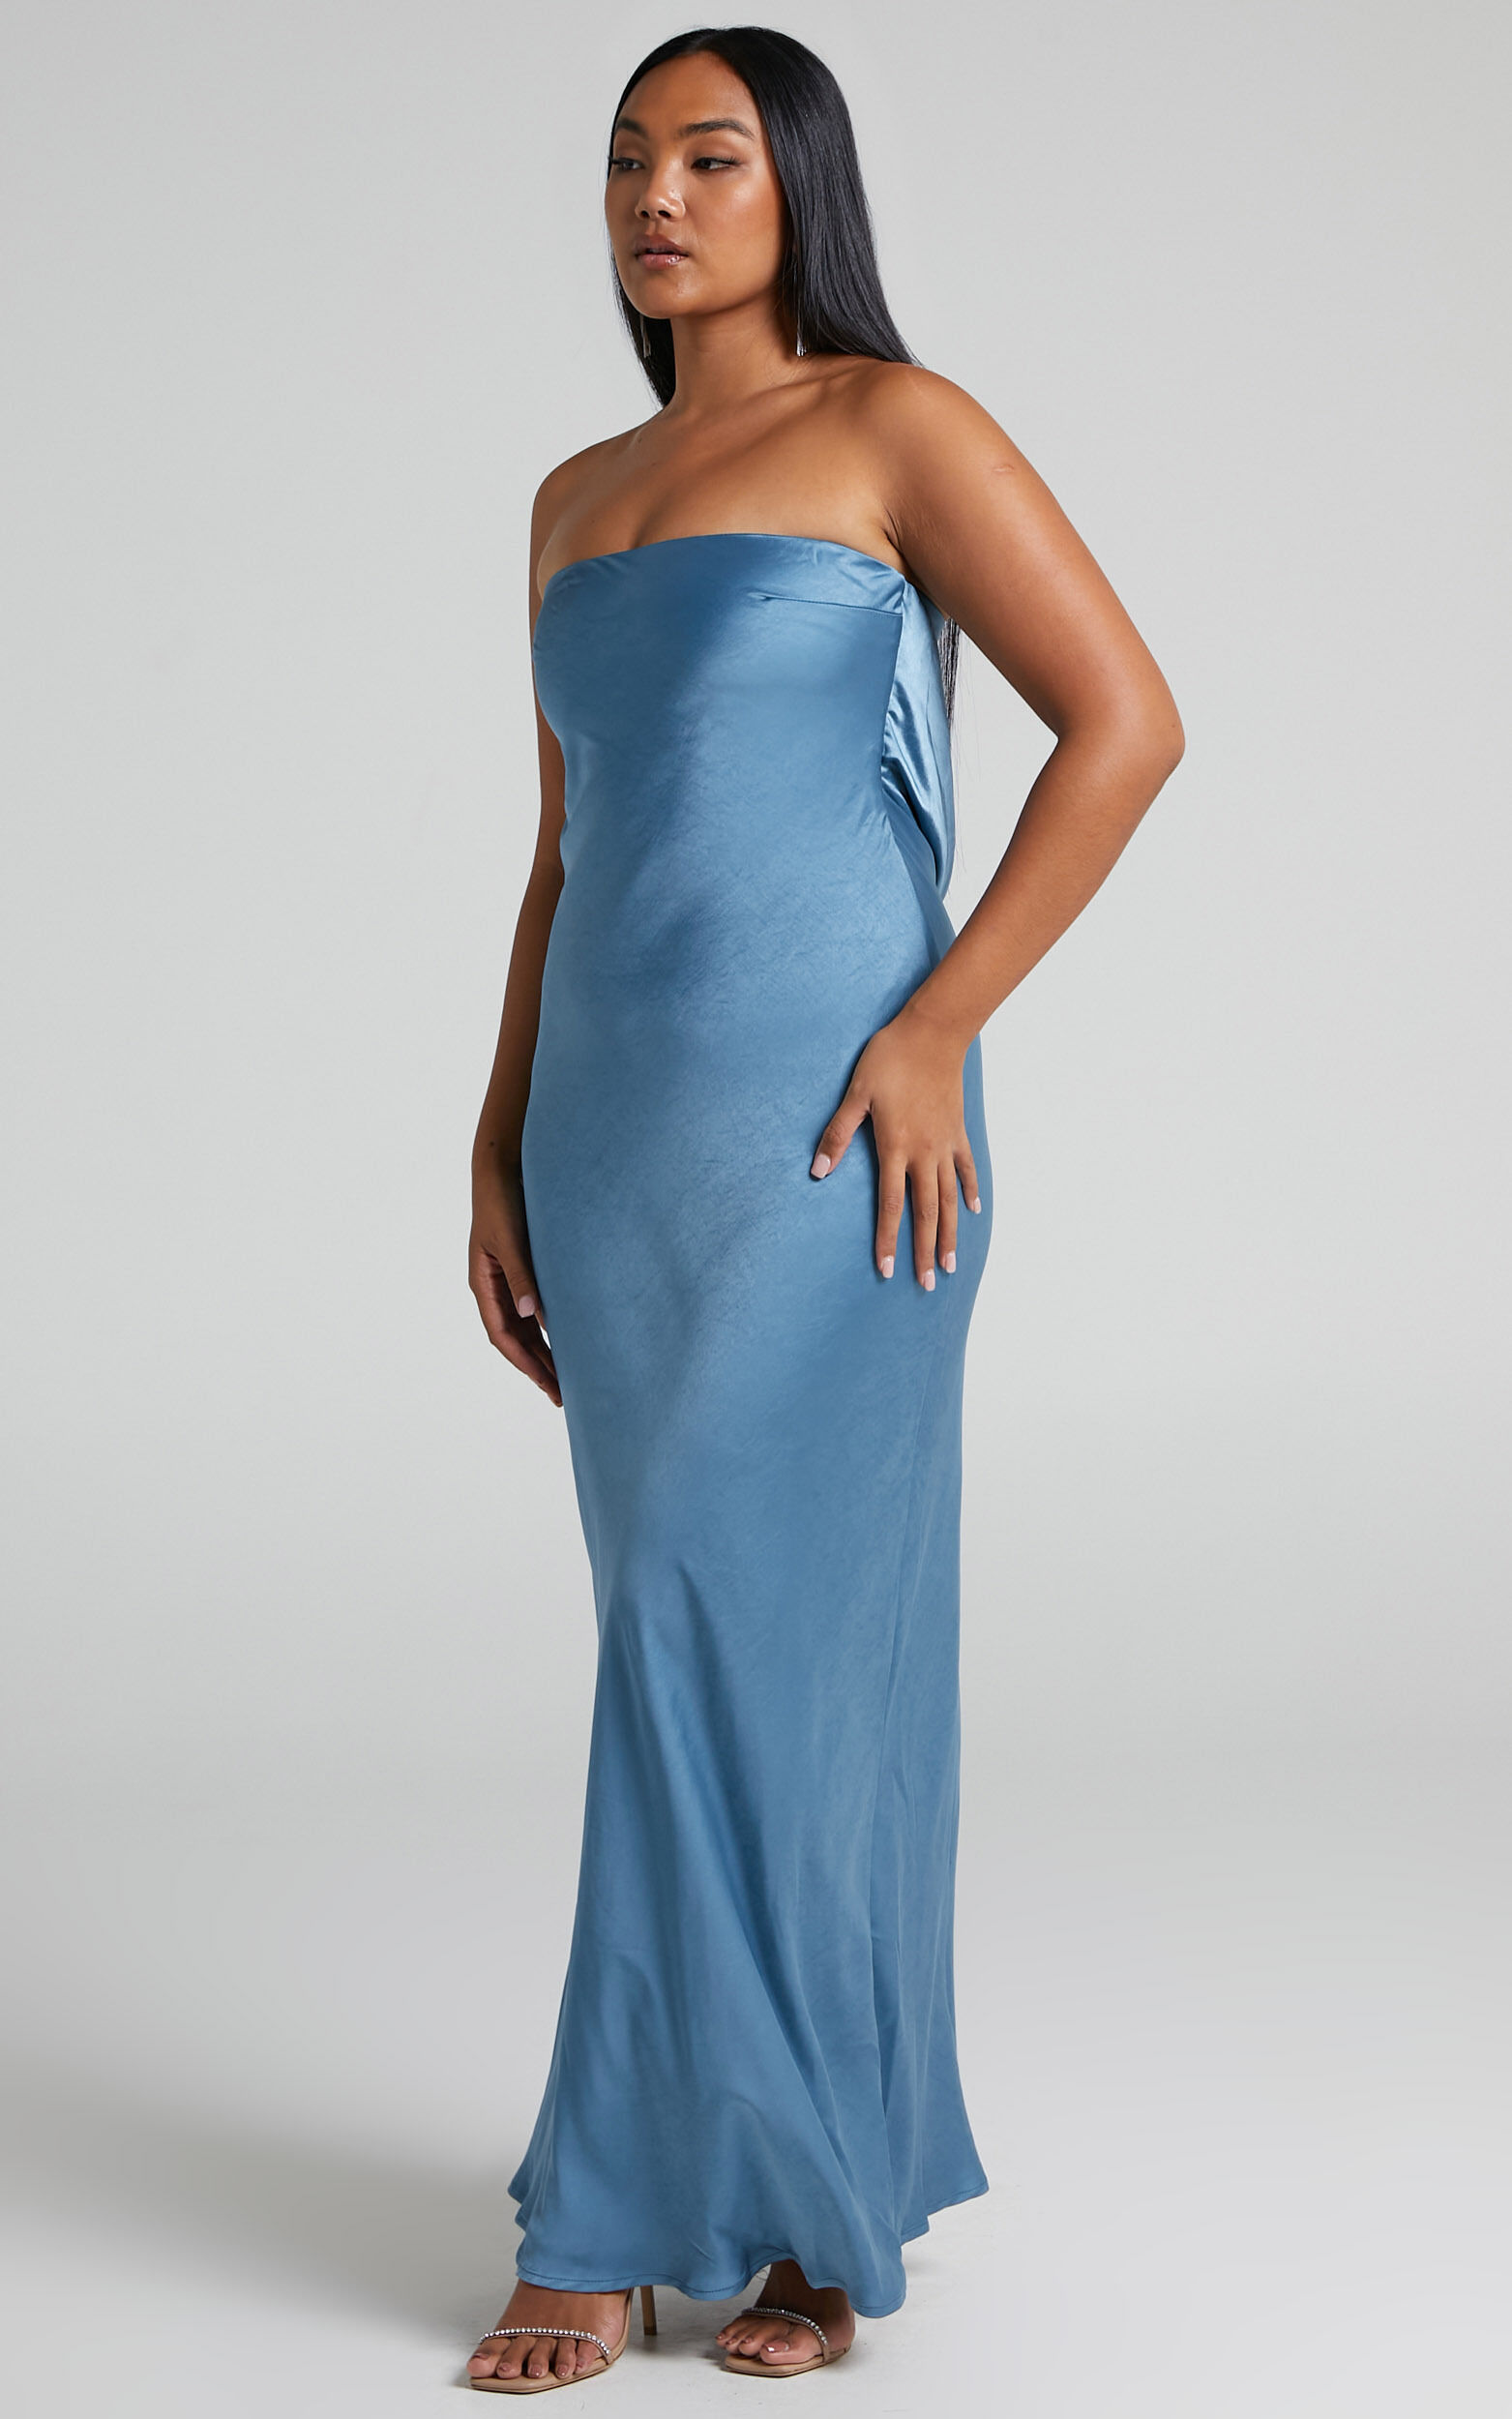 Charlita Maxi - Satin Blue Dress USA Steel Cowl in Strapless Back Dress Showpo 